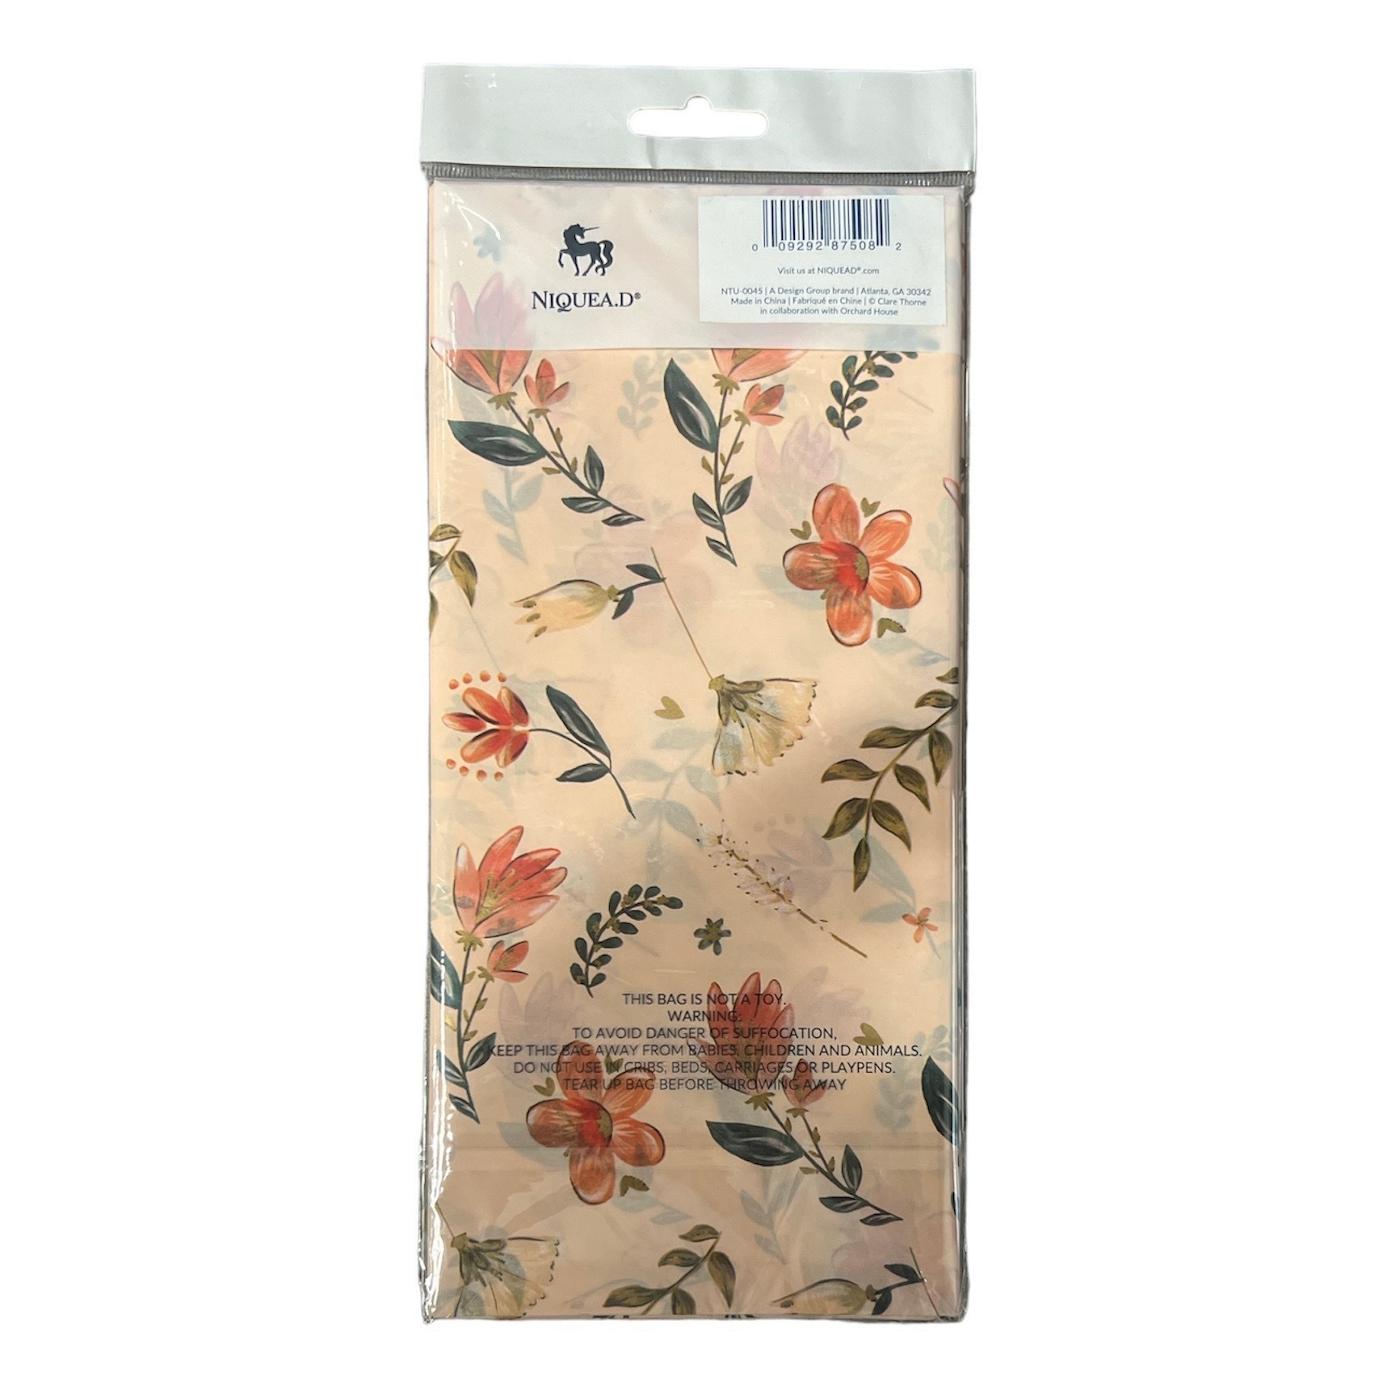 NIQUEA.D Floral Tissue Paper; image 2 of 2